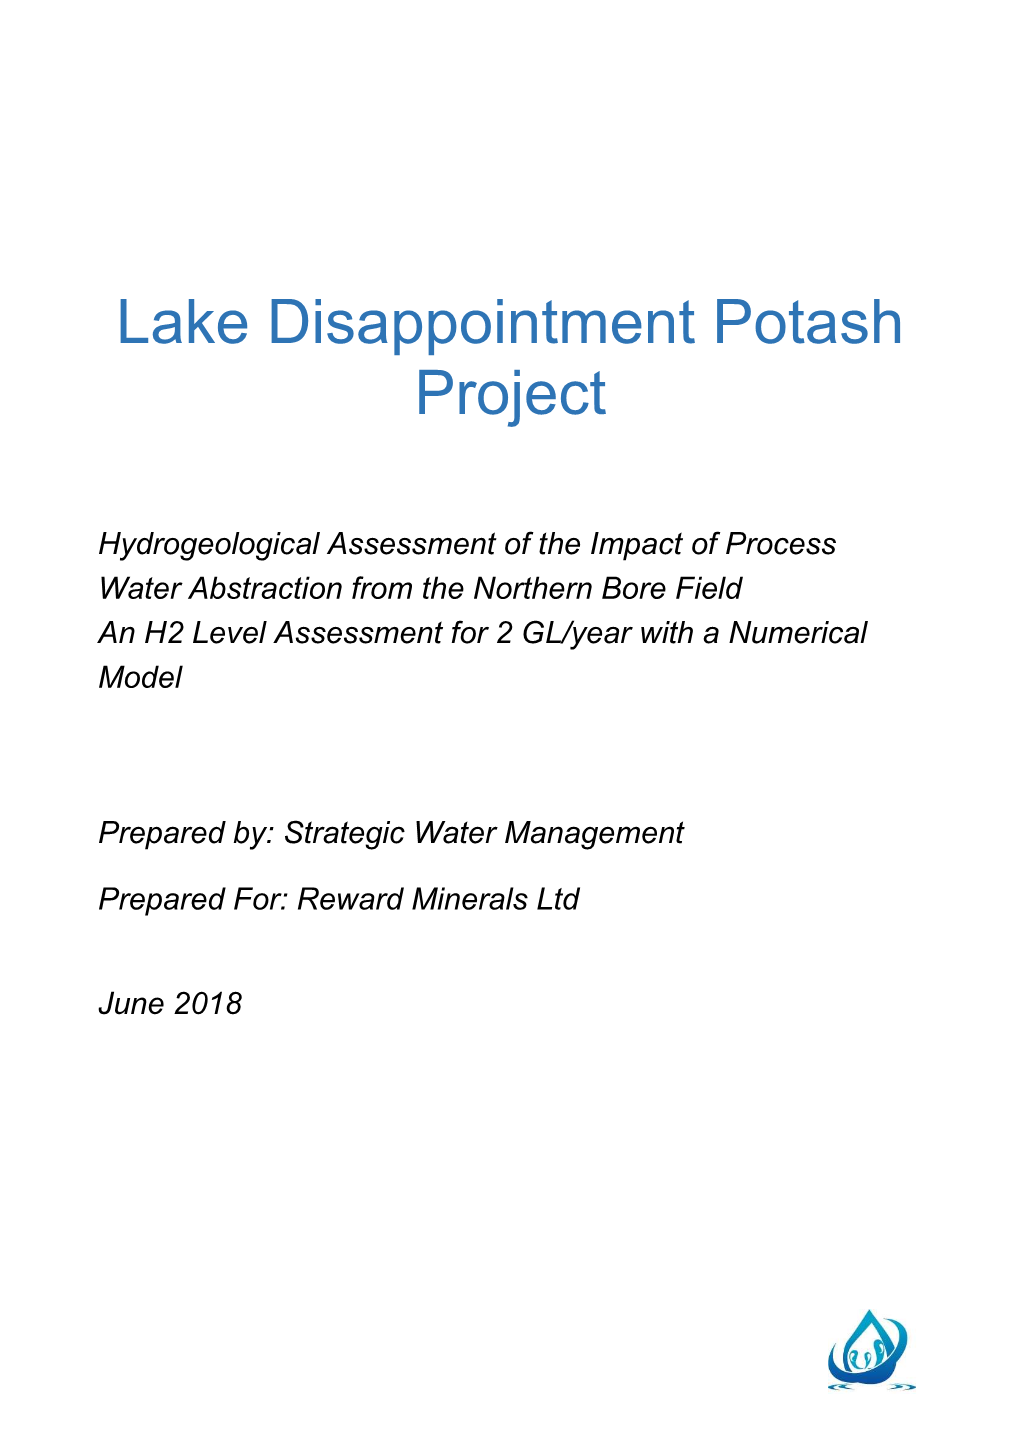 Lake Disappointment Potash Project